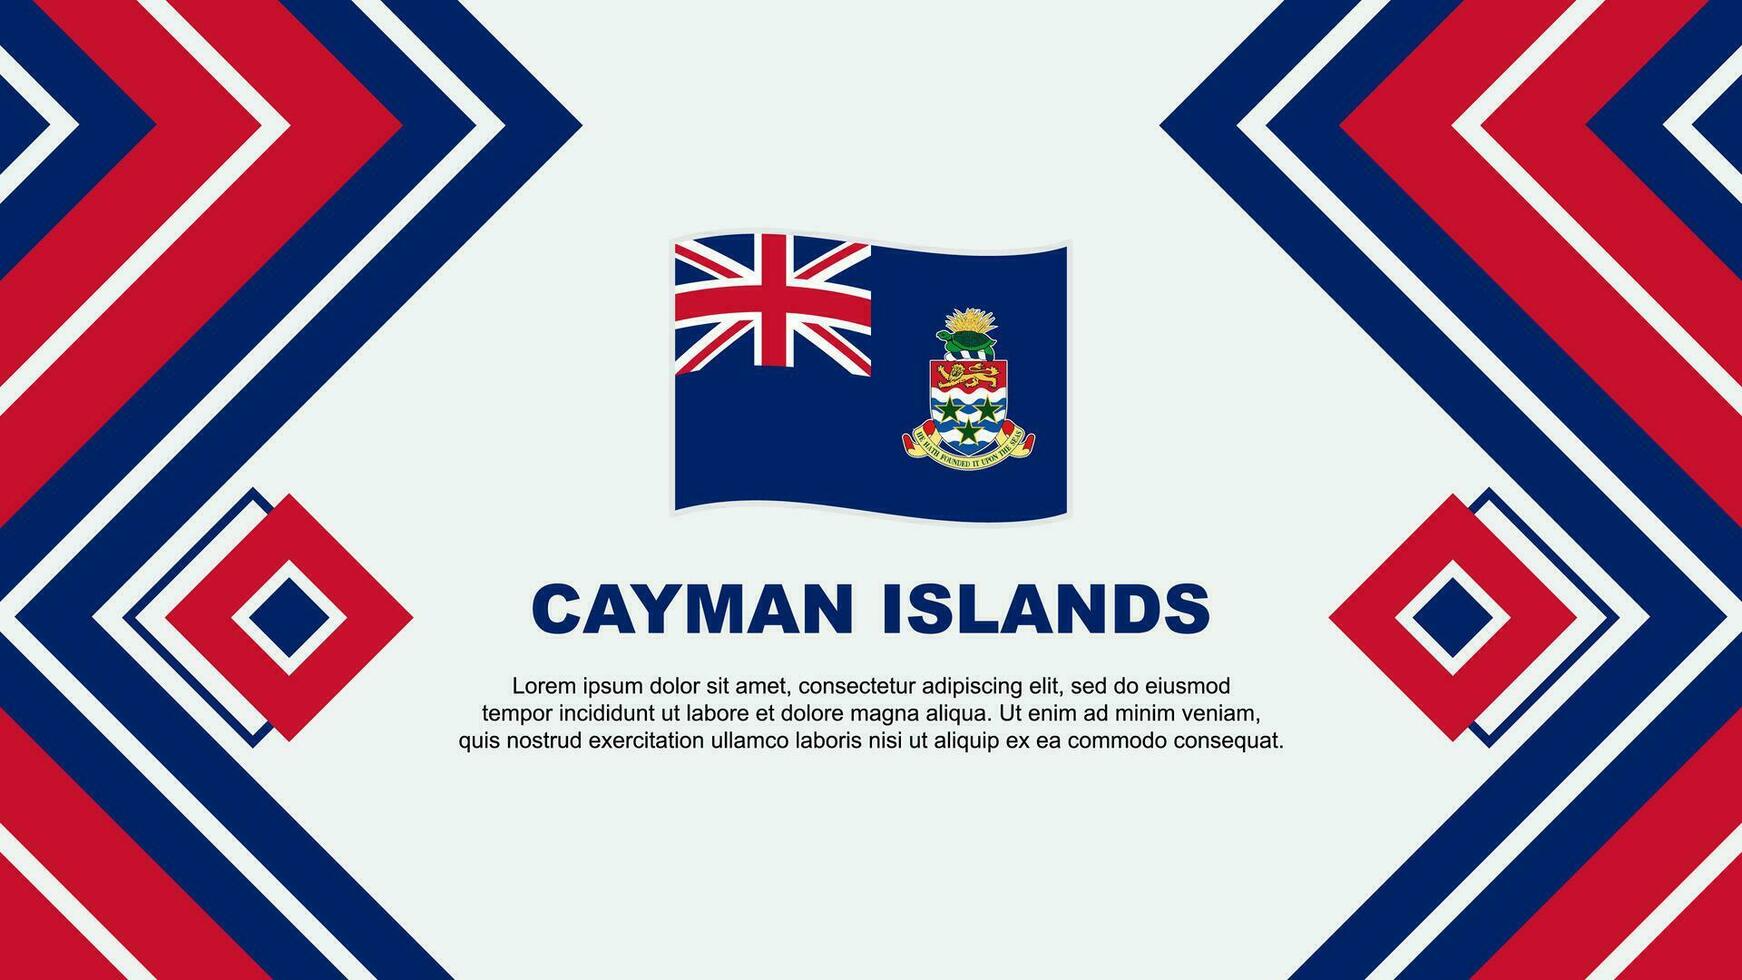 Cayman Islands Flag Abstract Background Design Template. Cayman Islands Independence Day Banner Wallpaper Vector Illustration. Cayman Islands Design